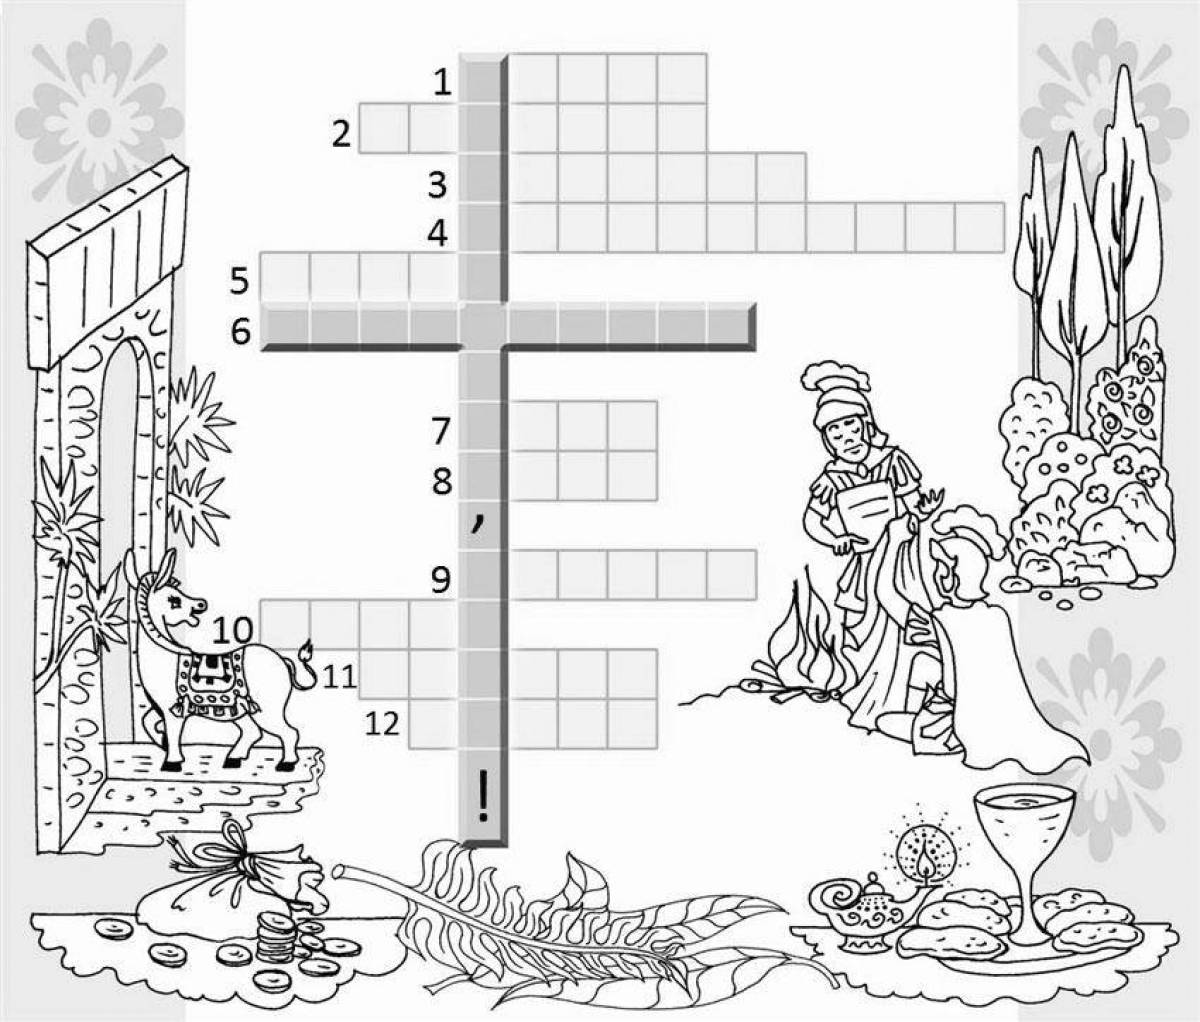 Detailed handmade ceramic tile crossword puzzle